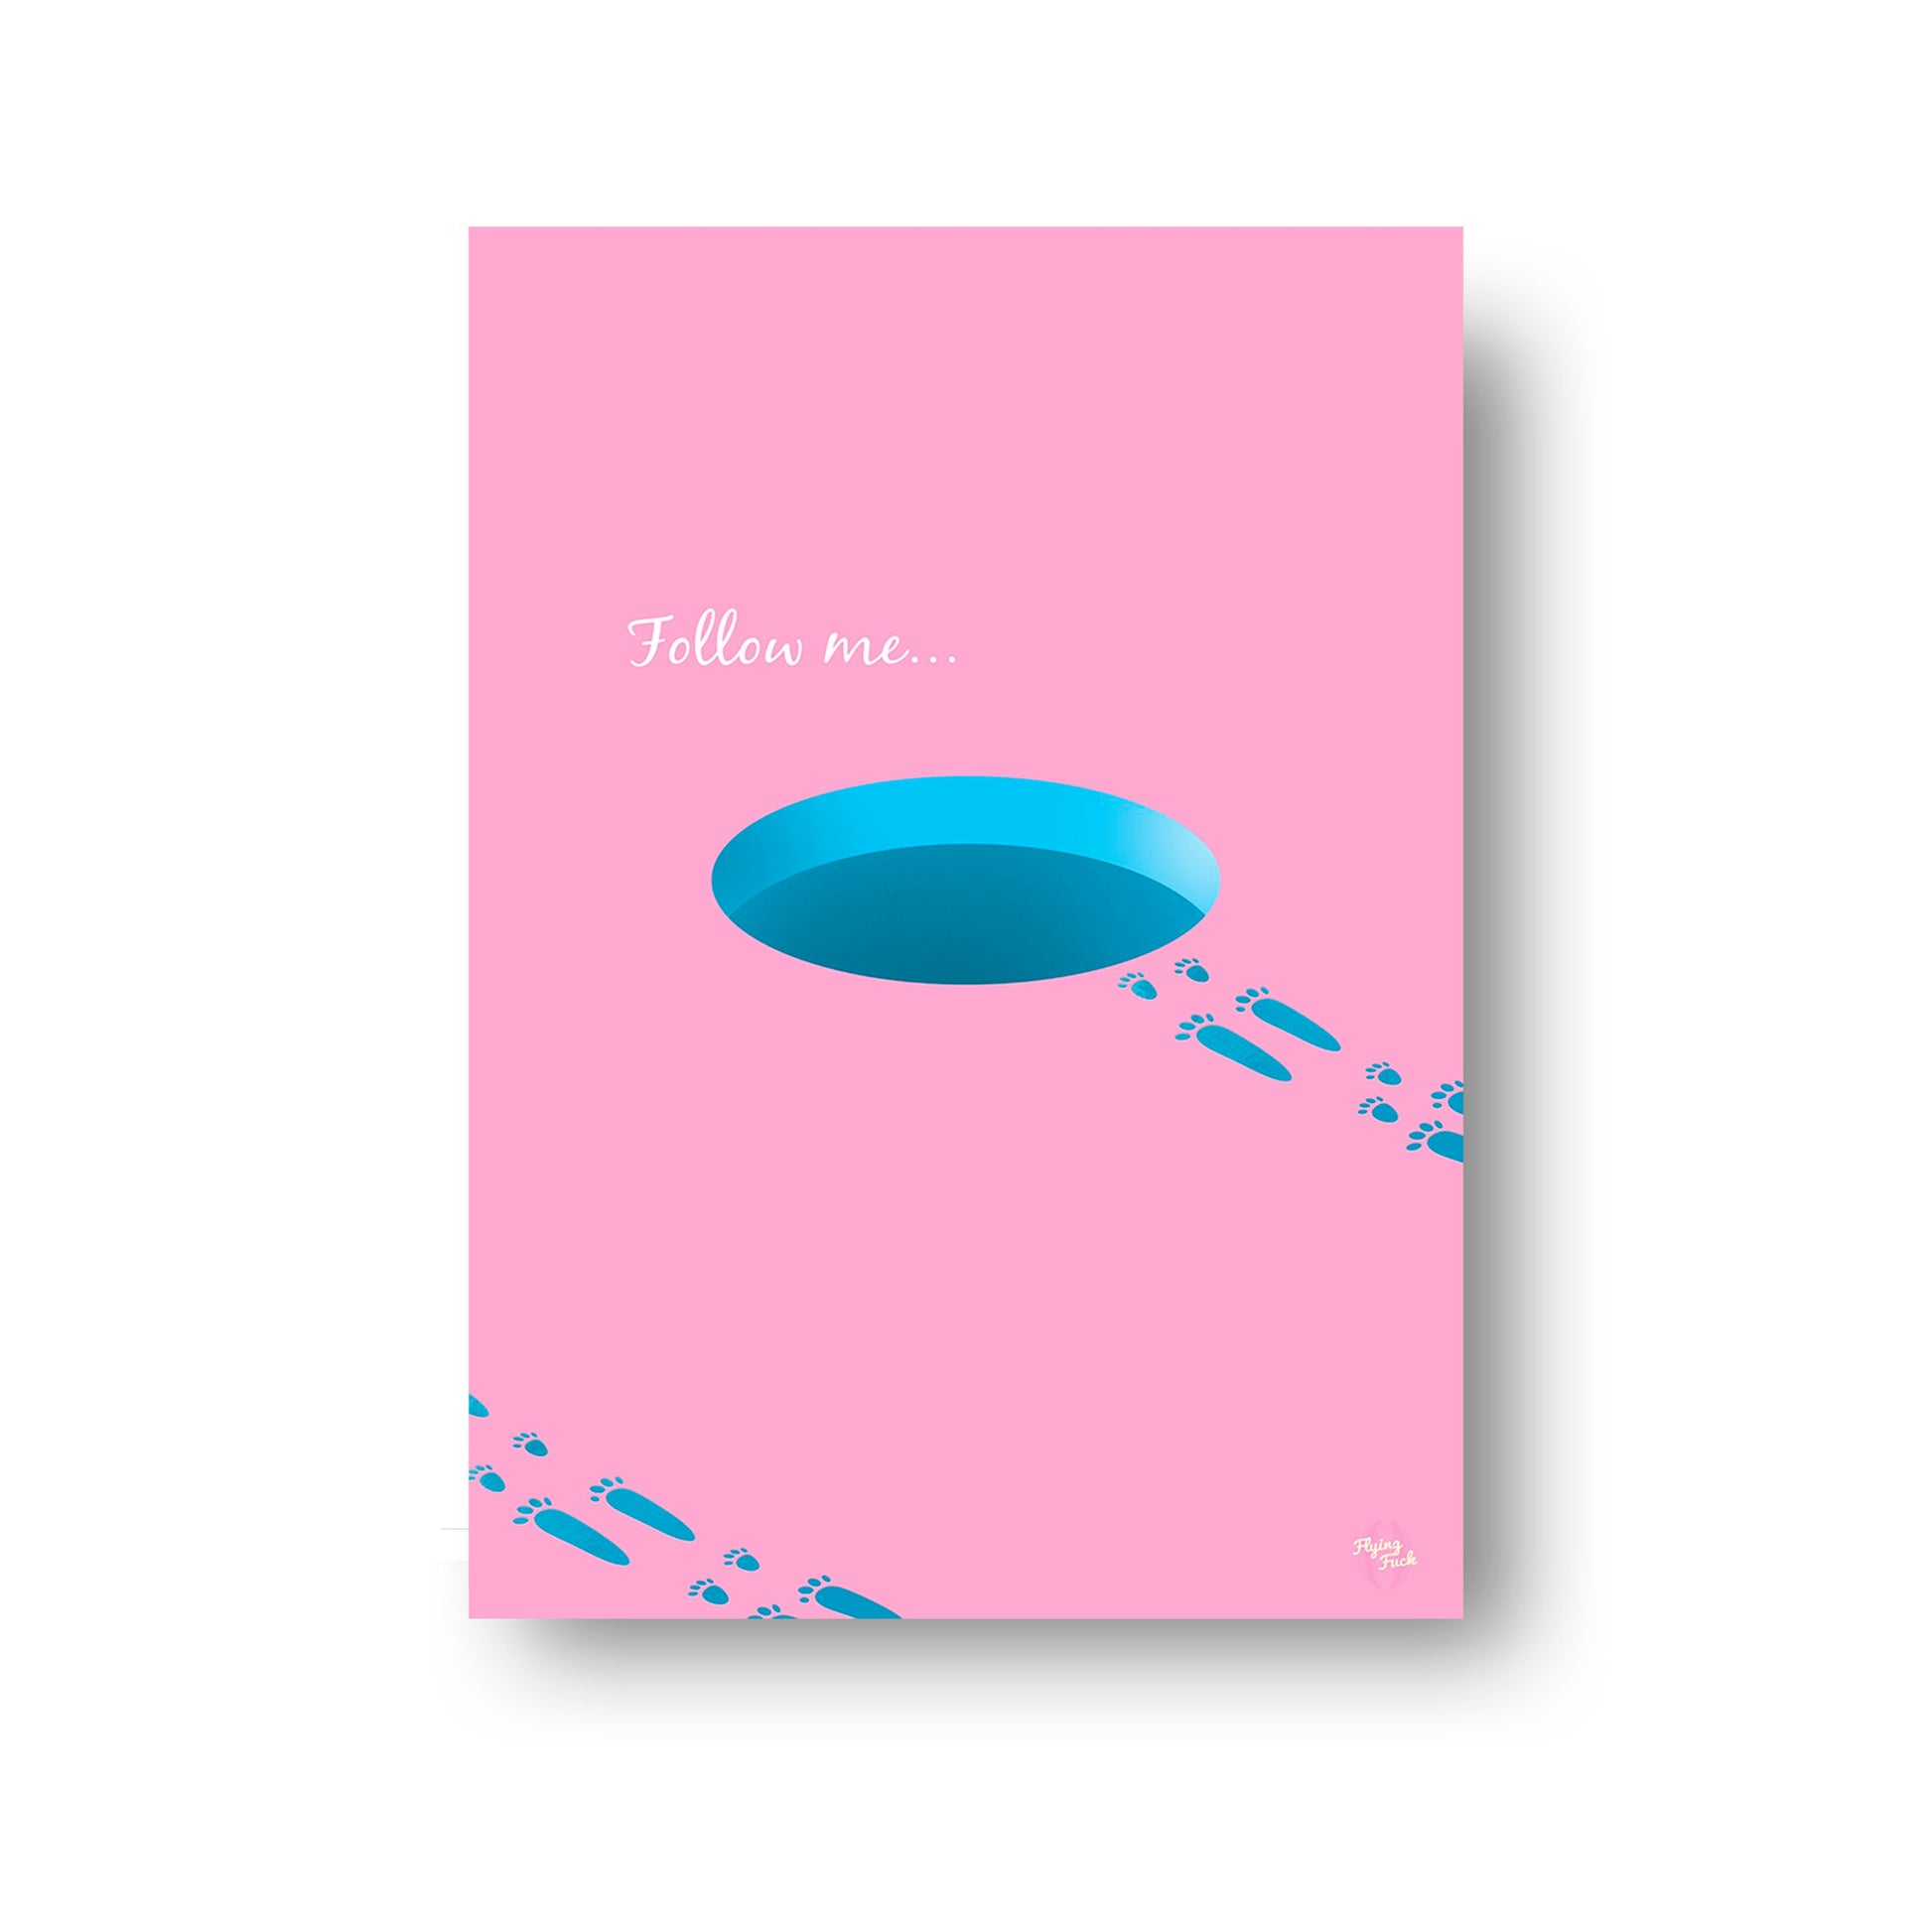 NOKUKO - art - Flying Fuck - Follow me - Pink Blue print